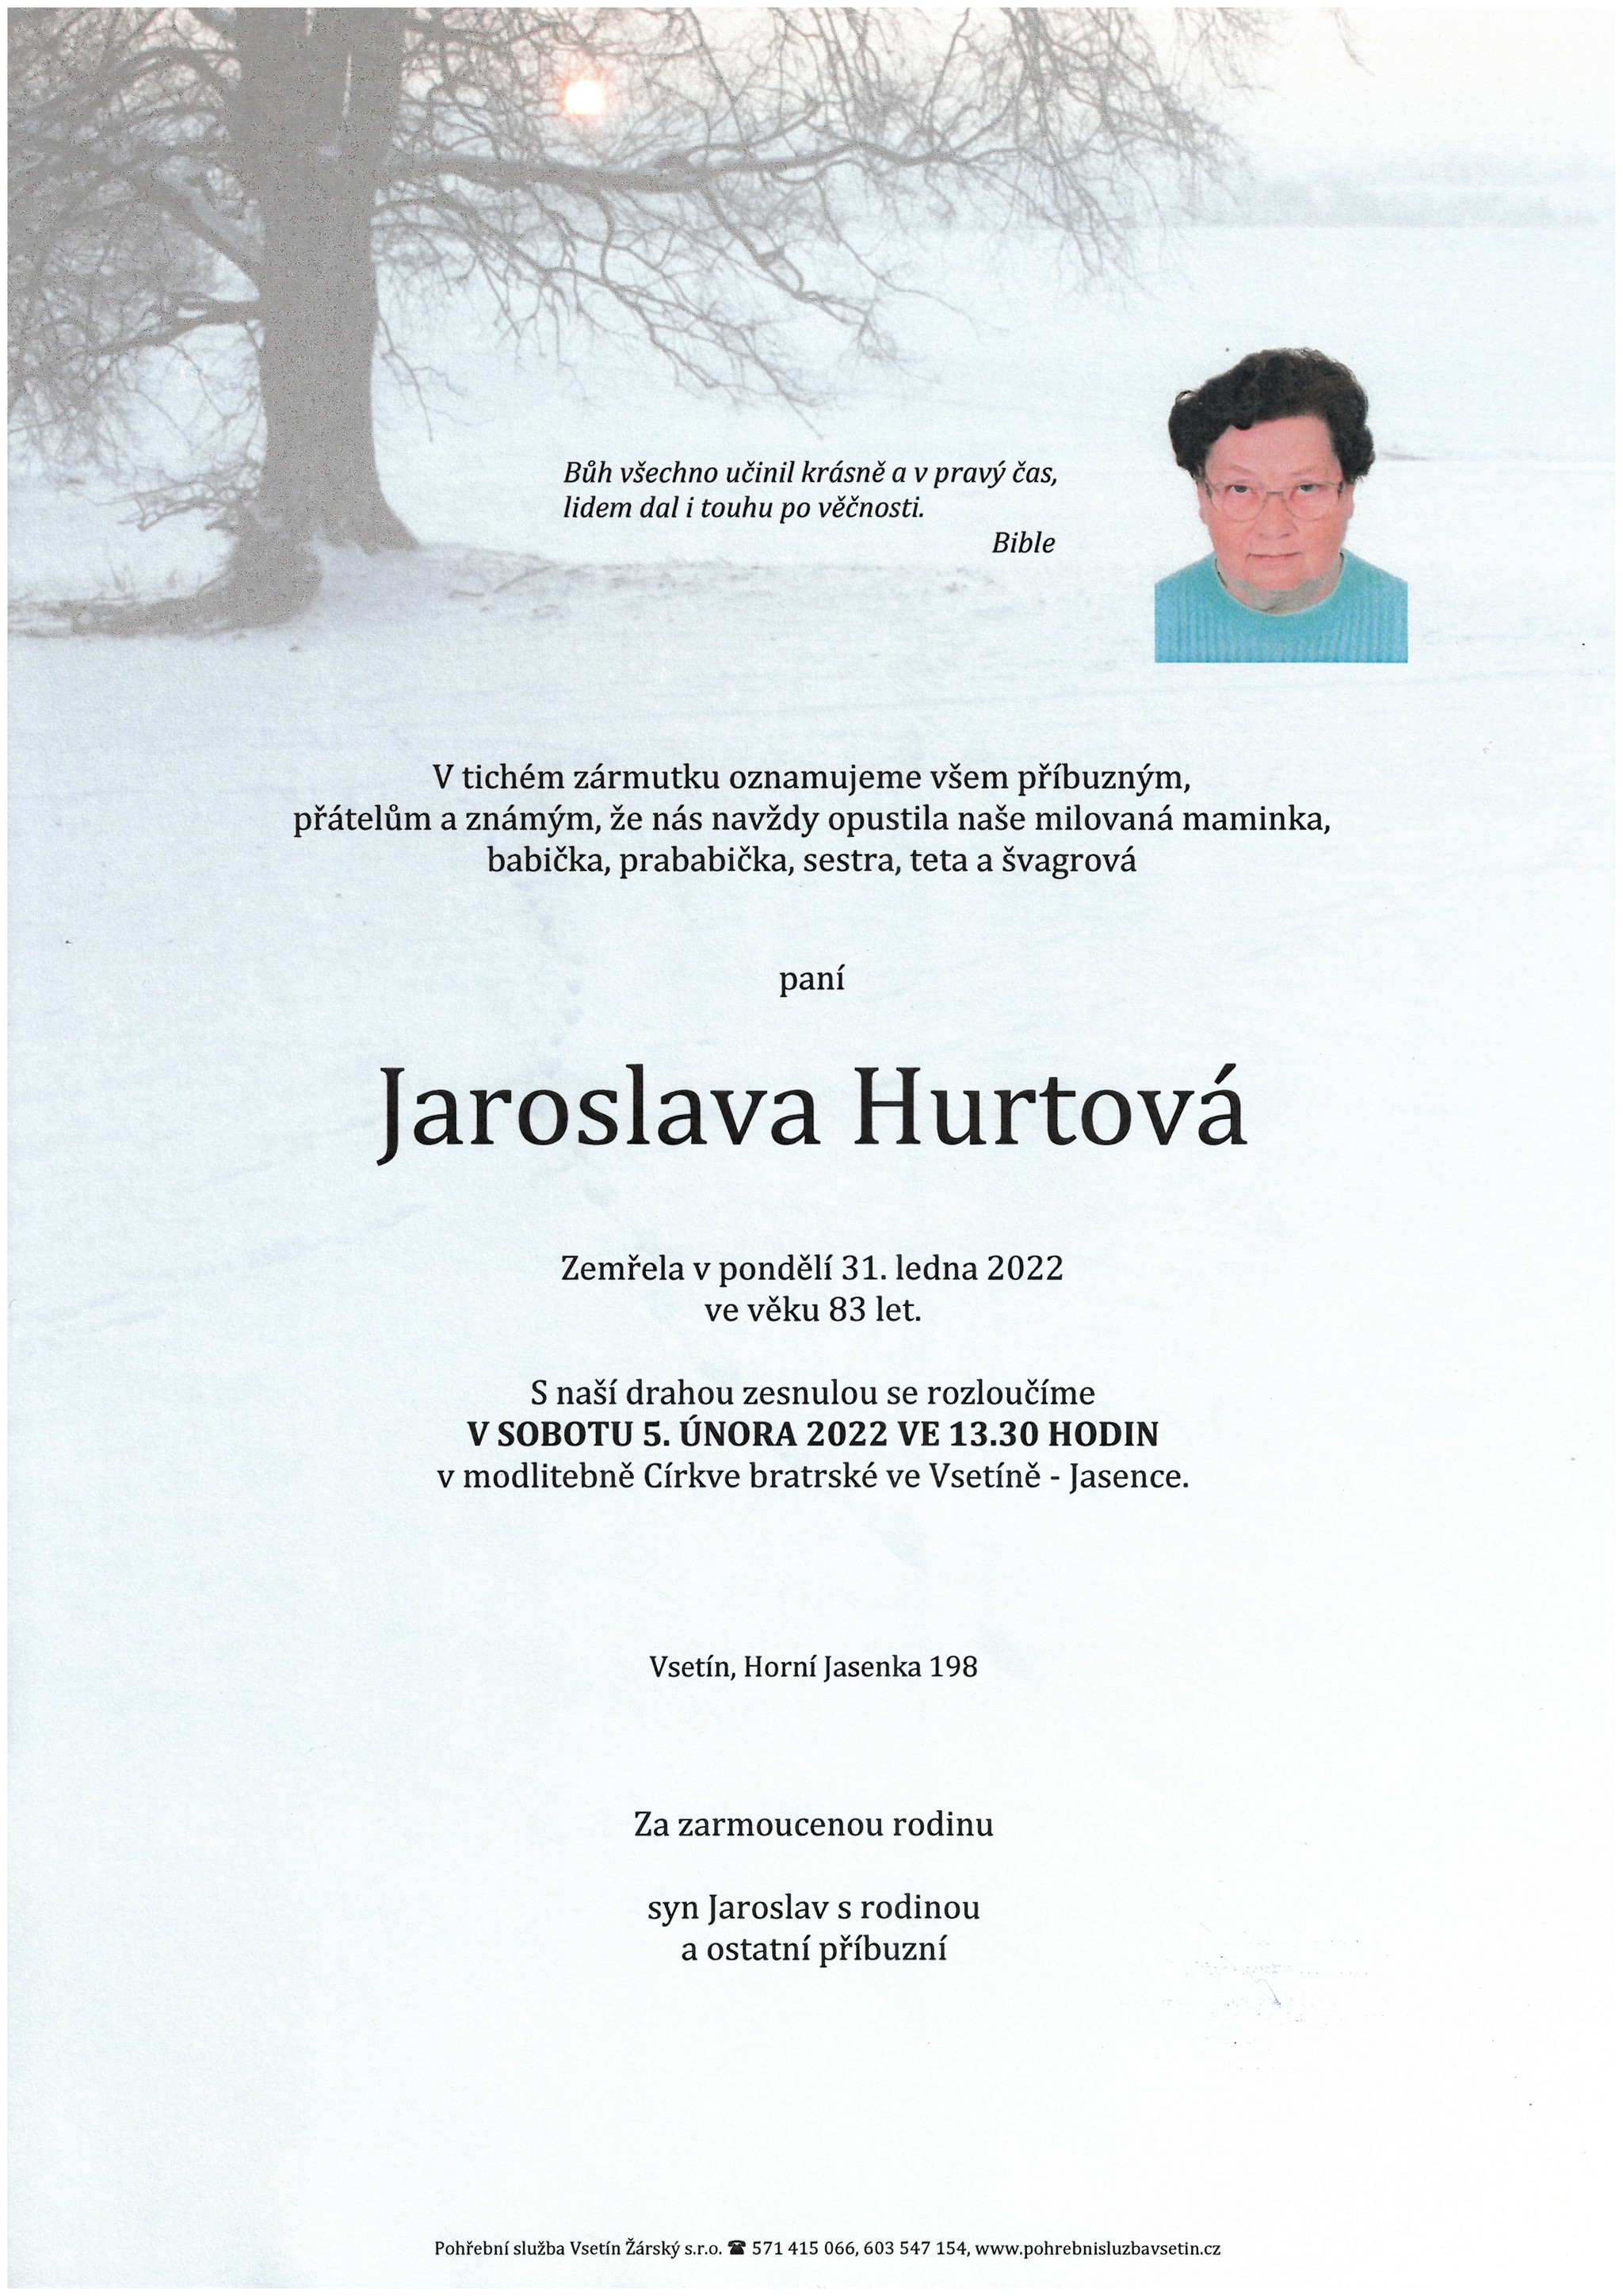 Jaroslava Hurtová